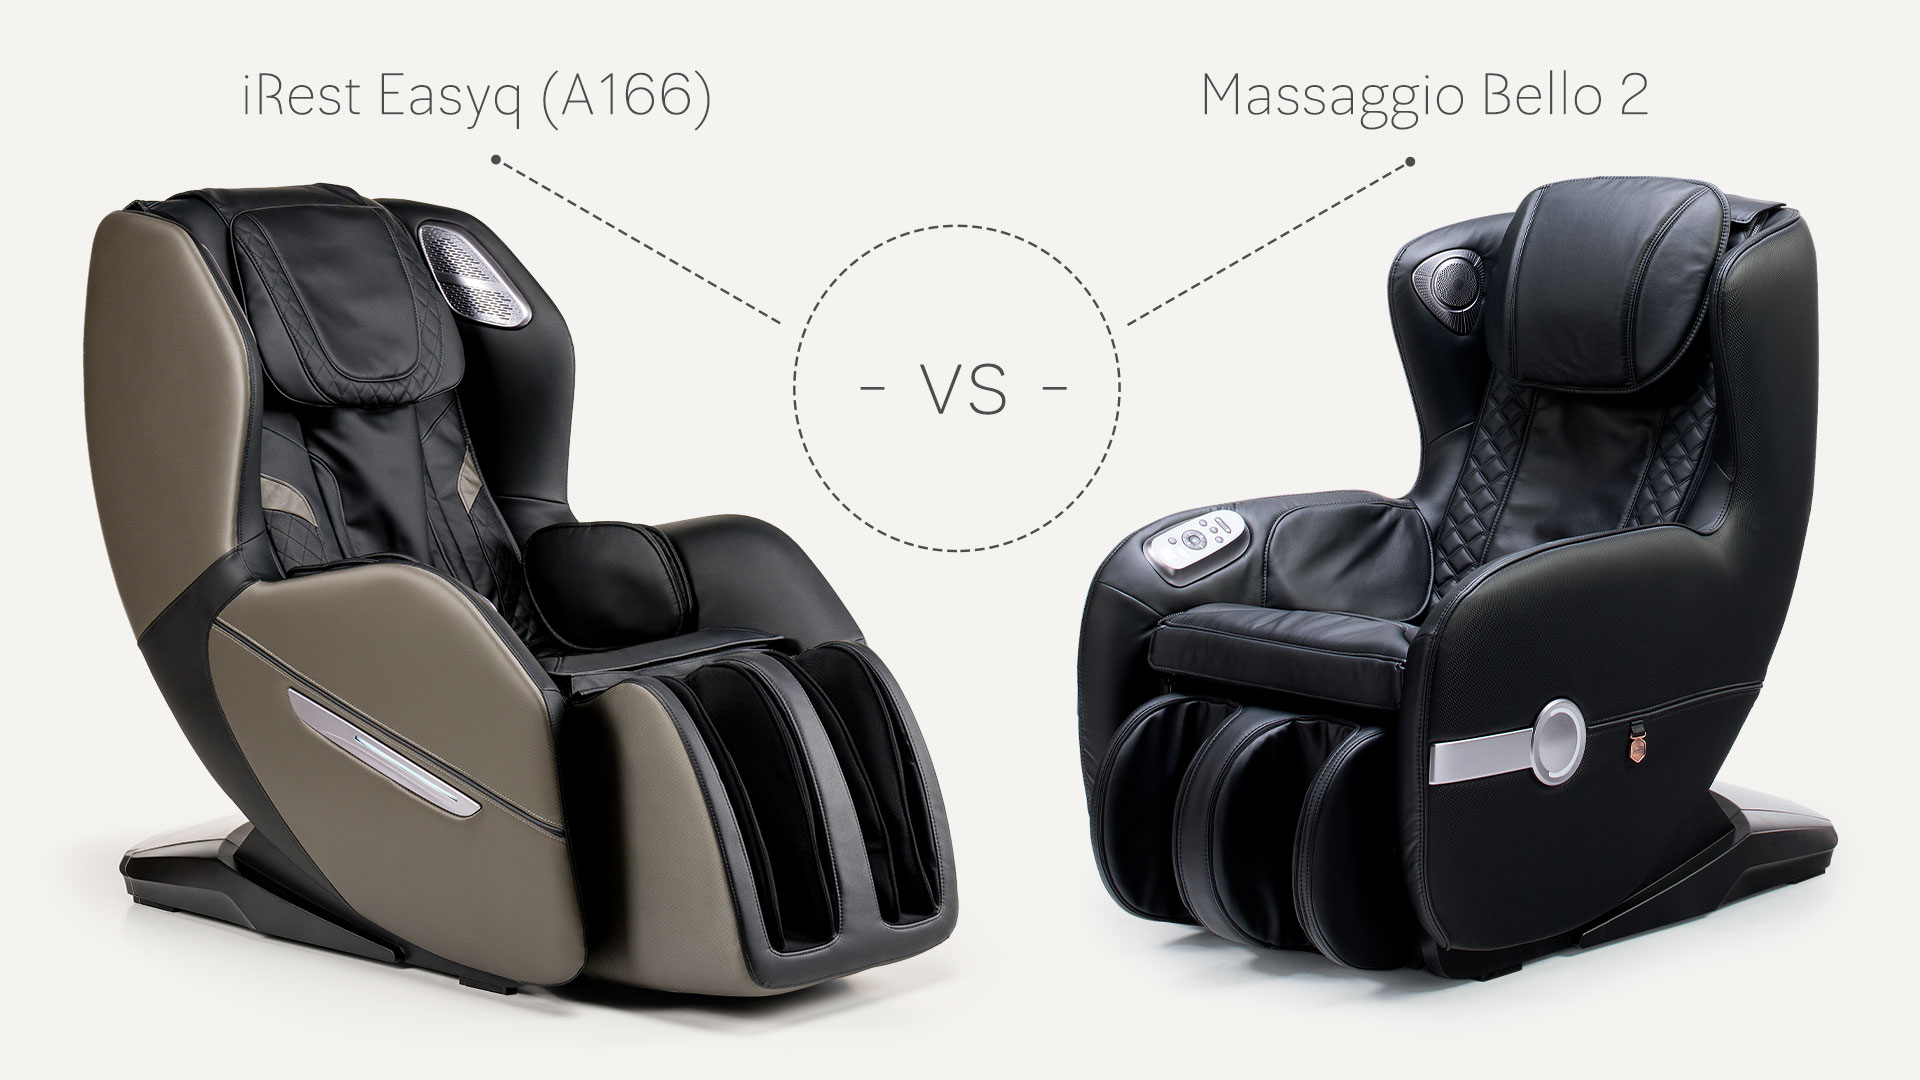 massage-chairs-easyqA166-vs-bello2